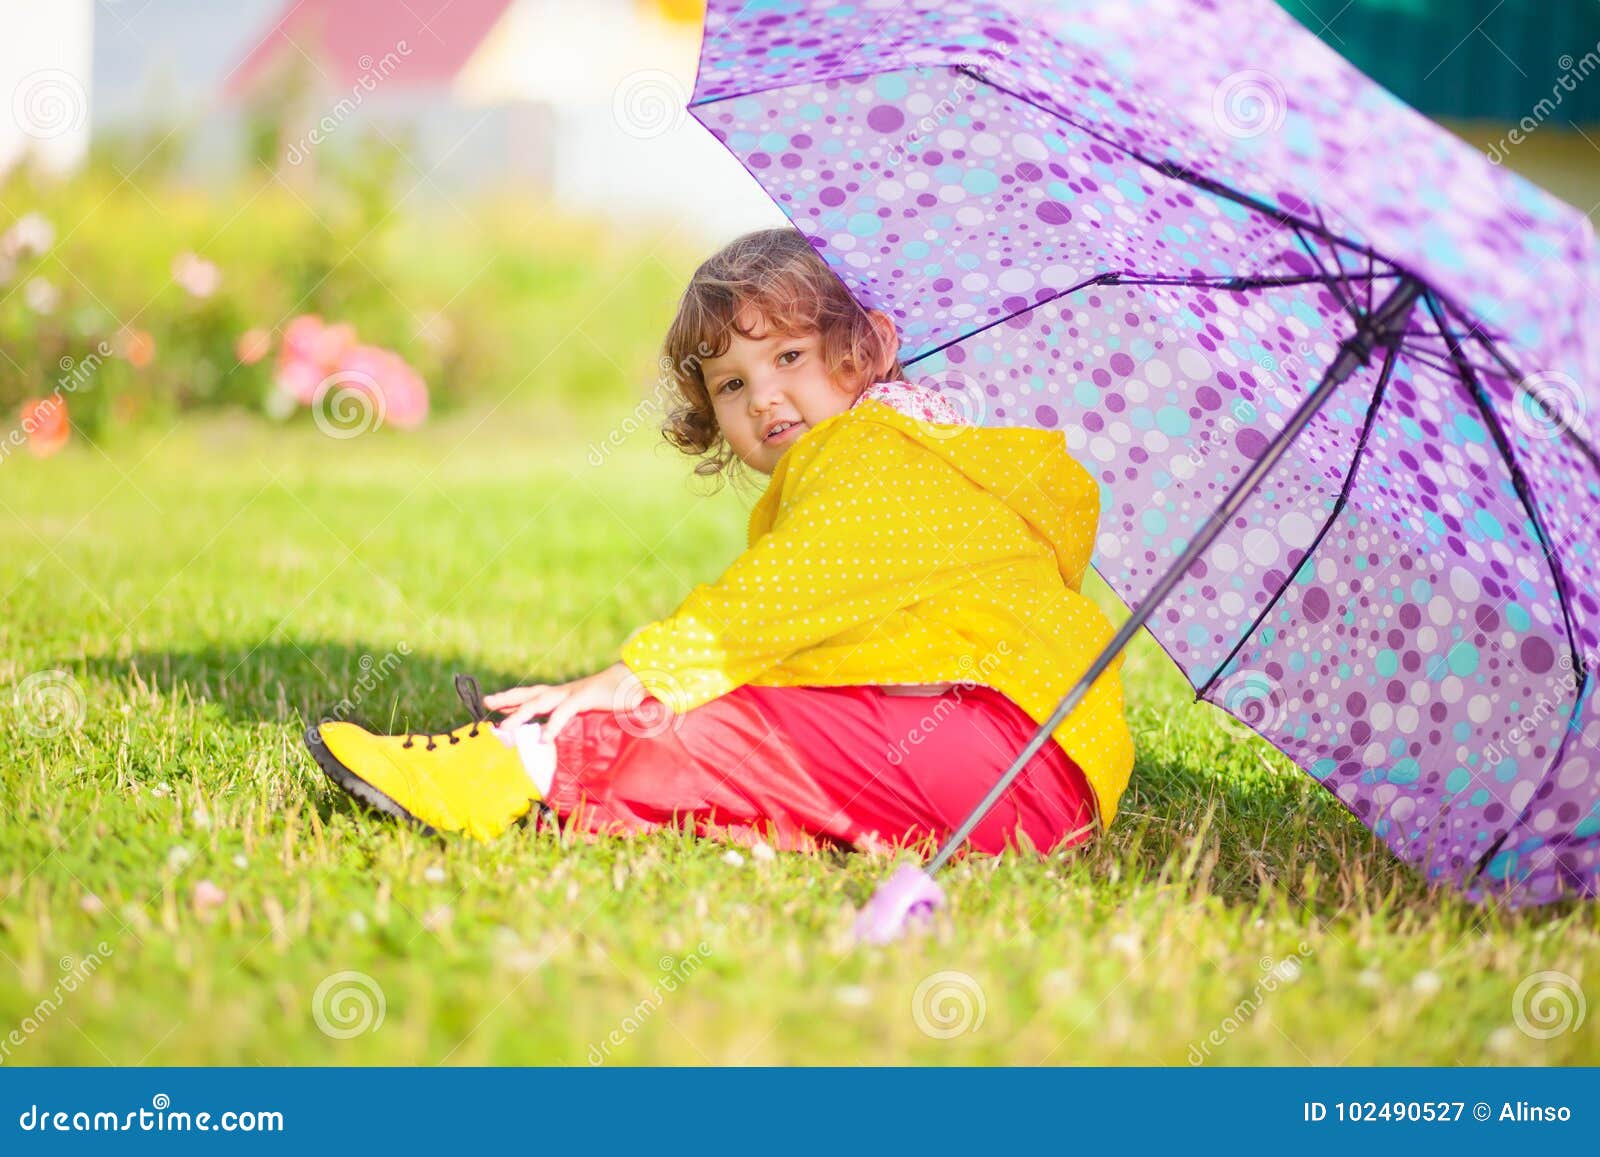 Rainy Day. Happy Toddler Girl Wearing Waterproof Coat with Umbrella ...